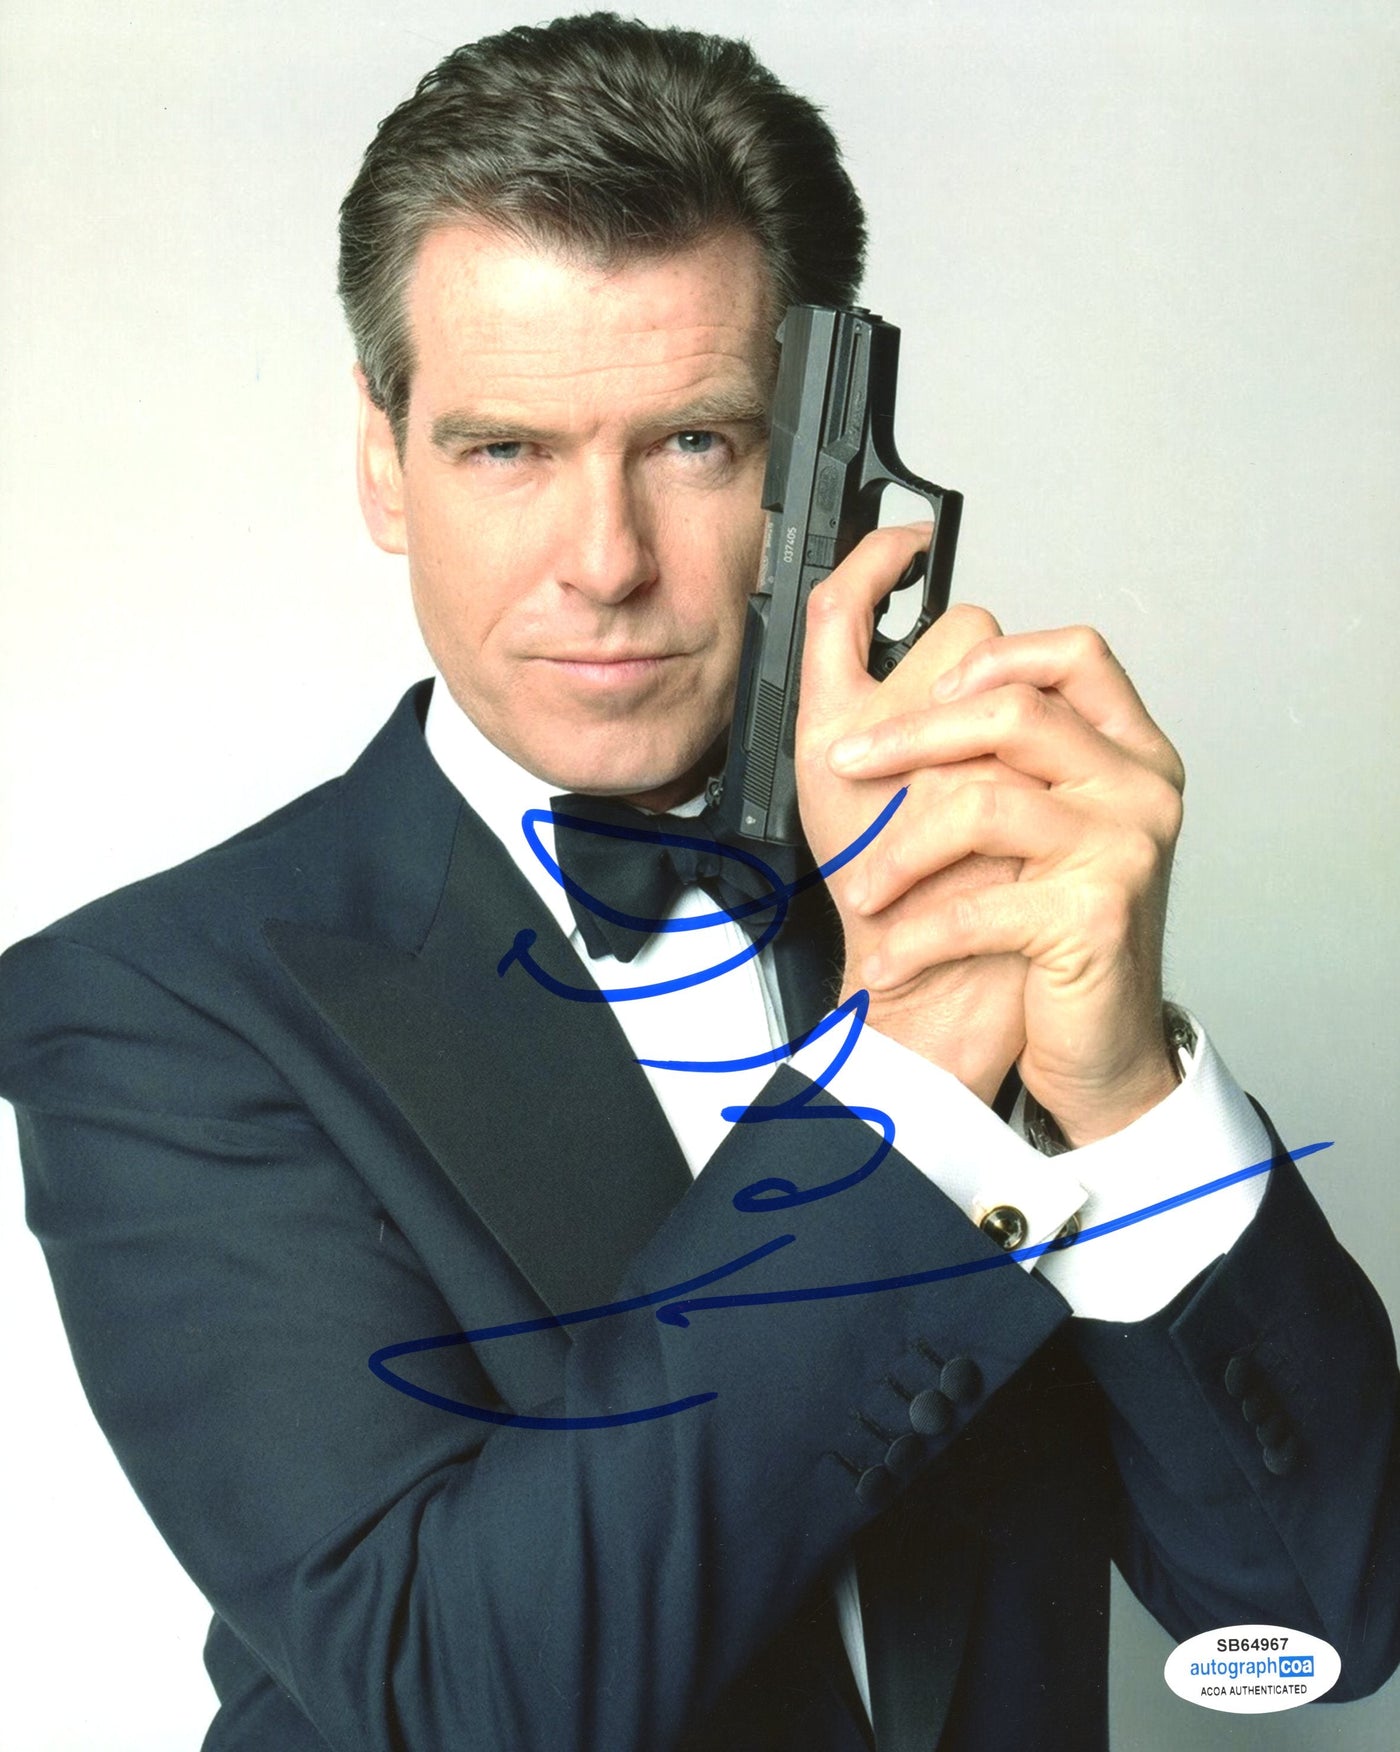 Pierce Brosnan Signed 8x10 Photo 007 James Bond Autographed ACOA #3